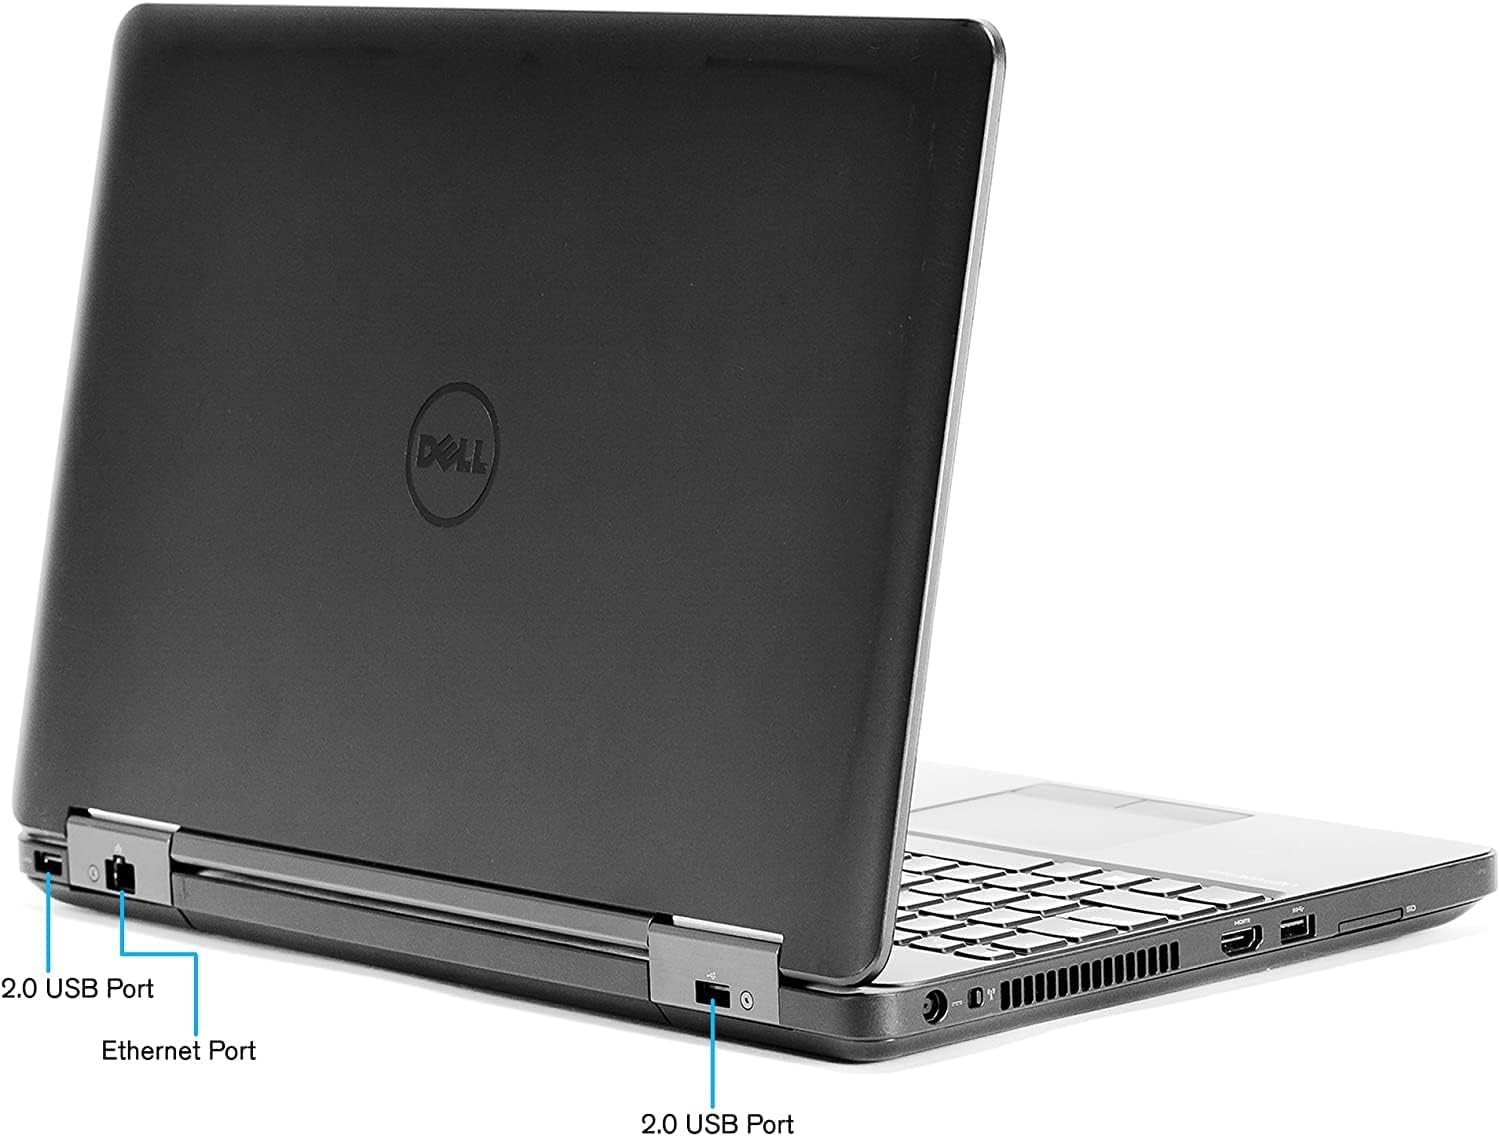 Refurbished Dell Latitude E5540 Laptop Computer, Intel Core i5, 8GB Ram, 500GB Hard Drive, Windows 10 Operating System